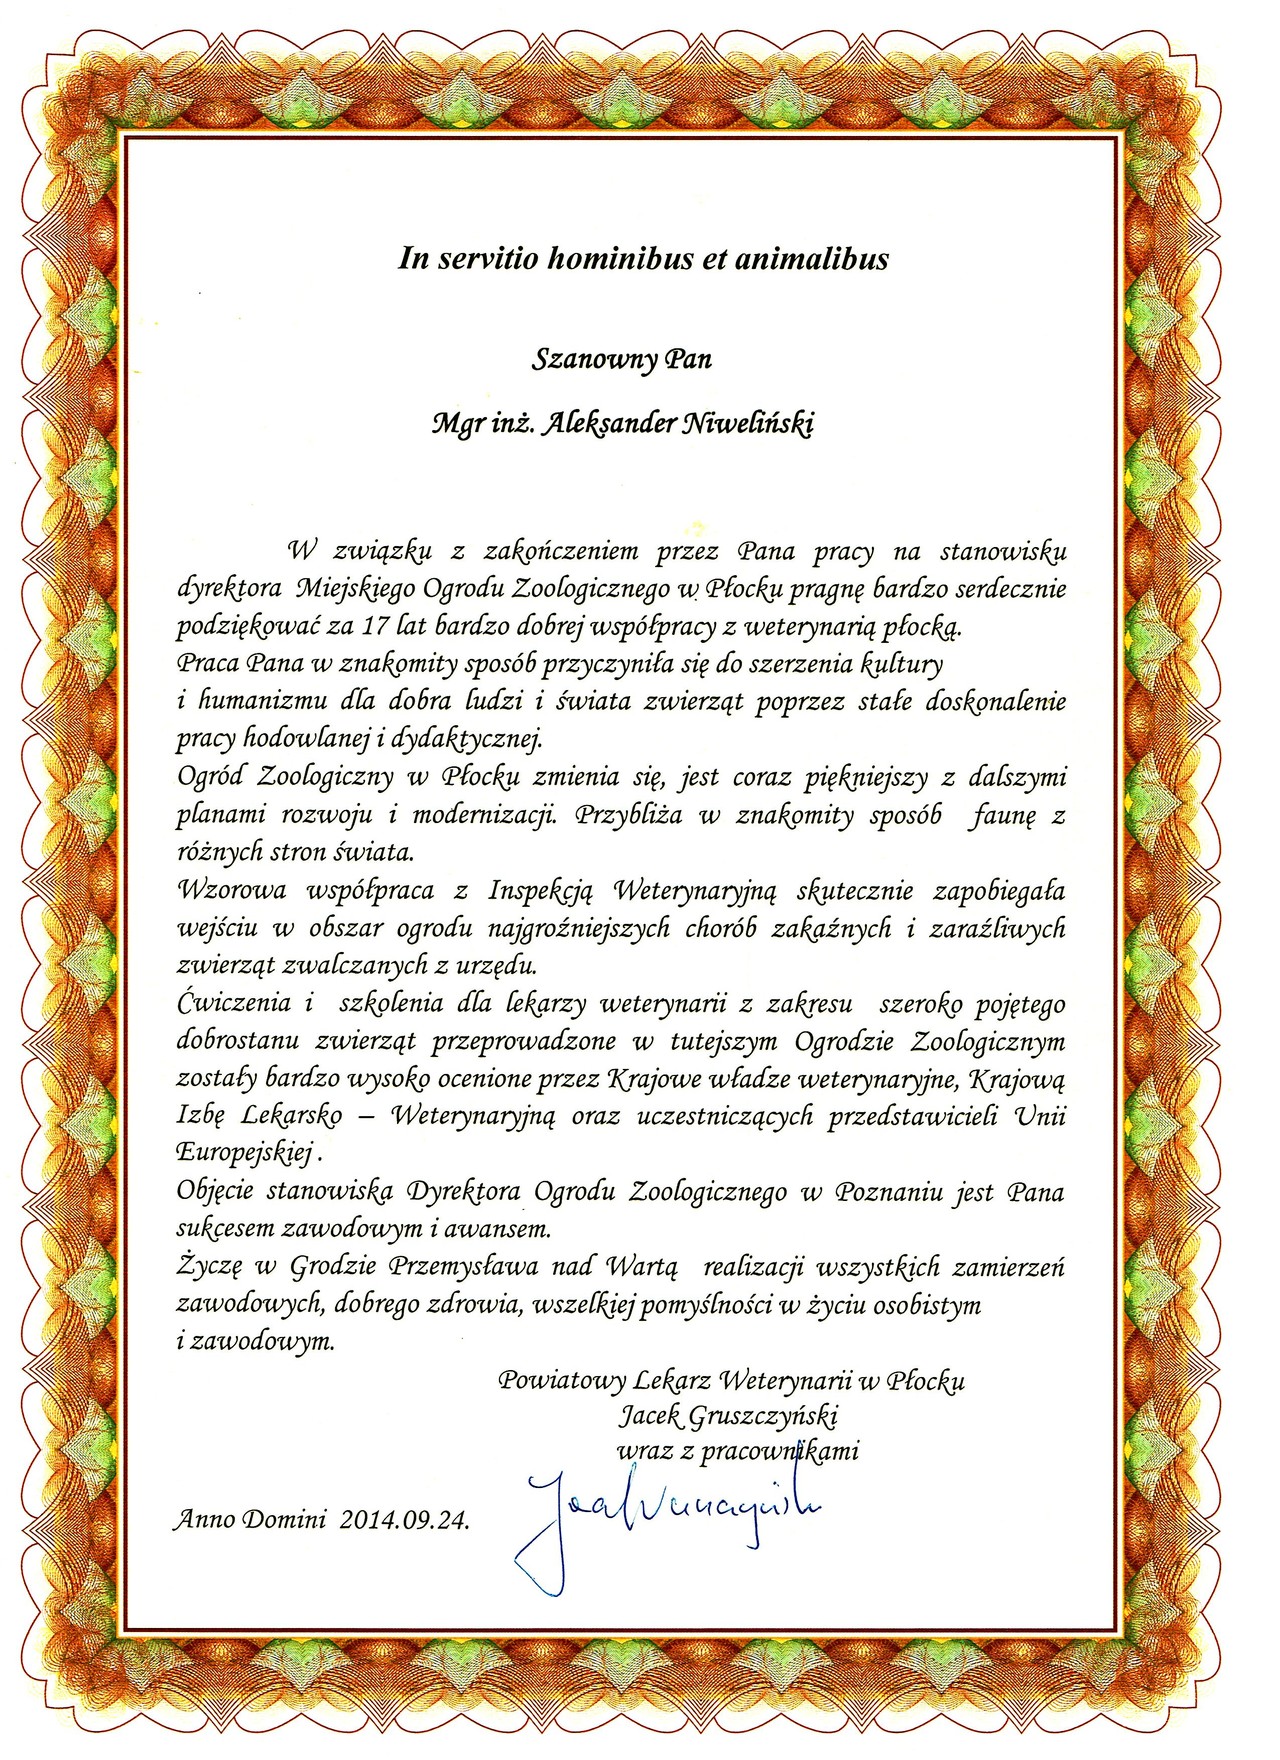 Acknowledgements Aleksander Niweliński - Płock District Veterinary Officer